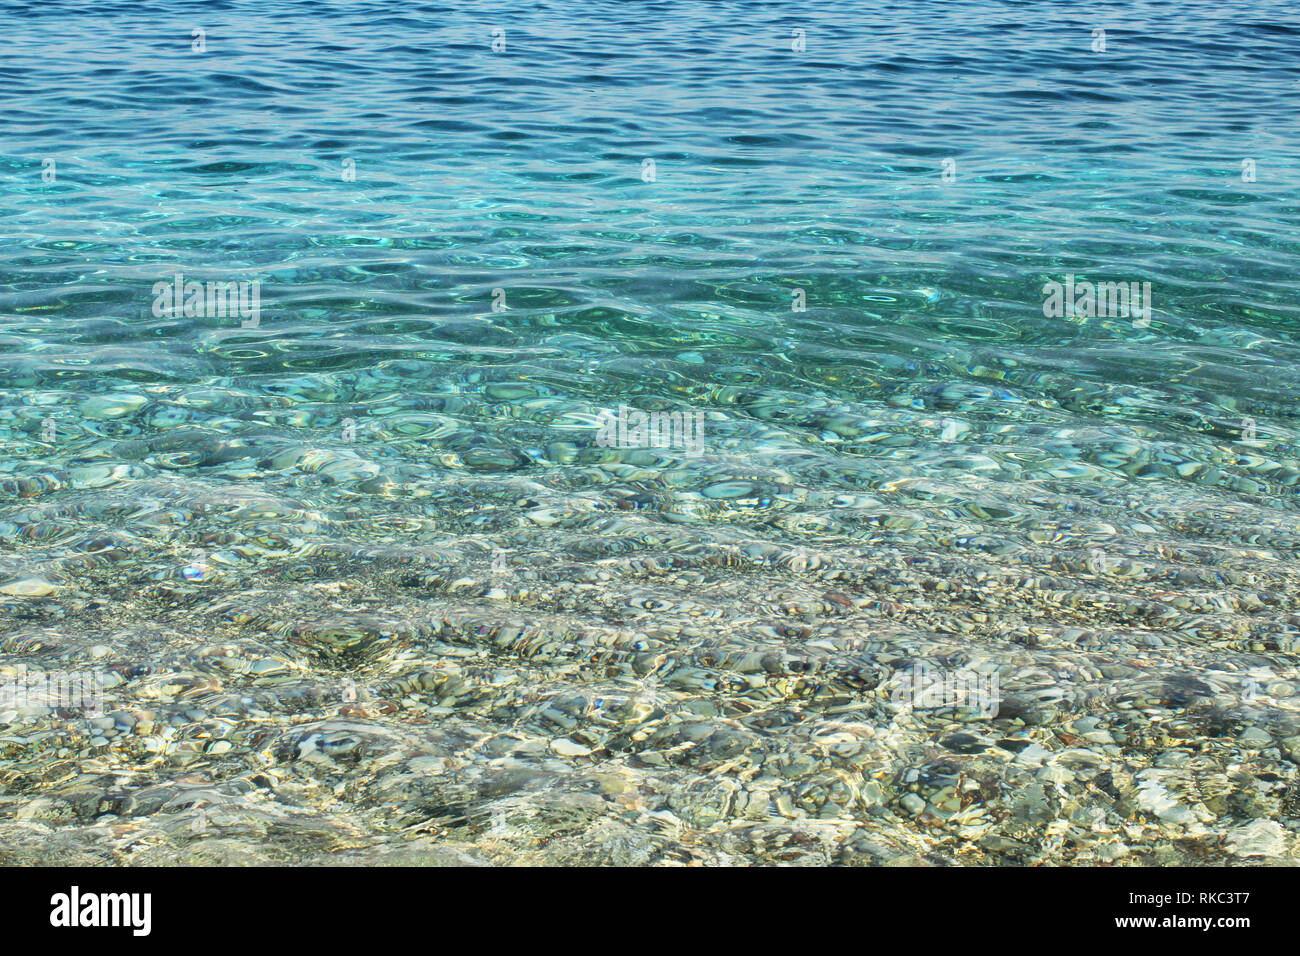 Kristallklares Wasser, Sommer Urlaub Konzept Stockfoto